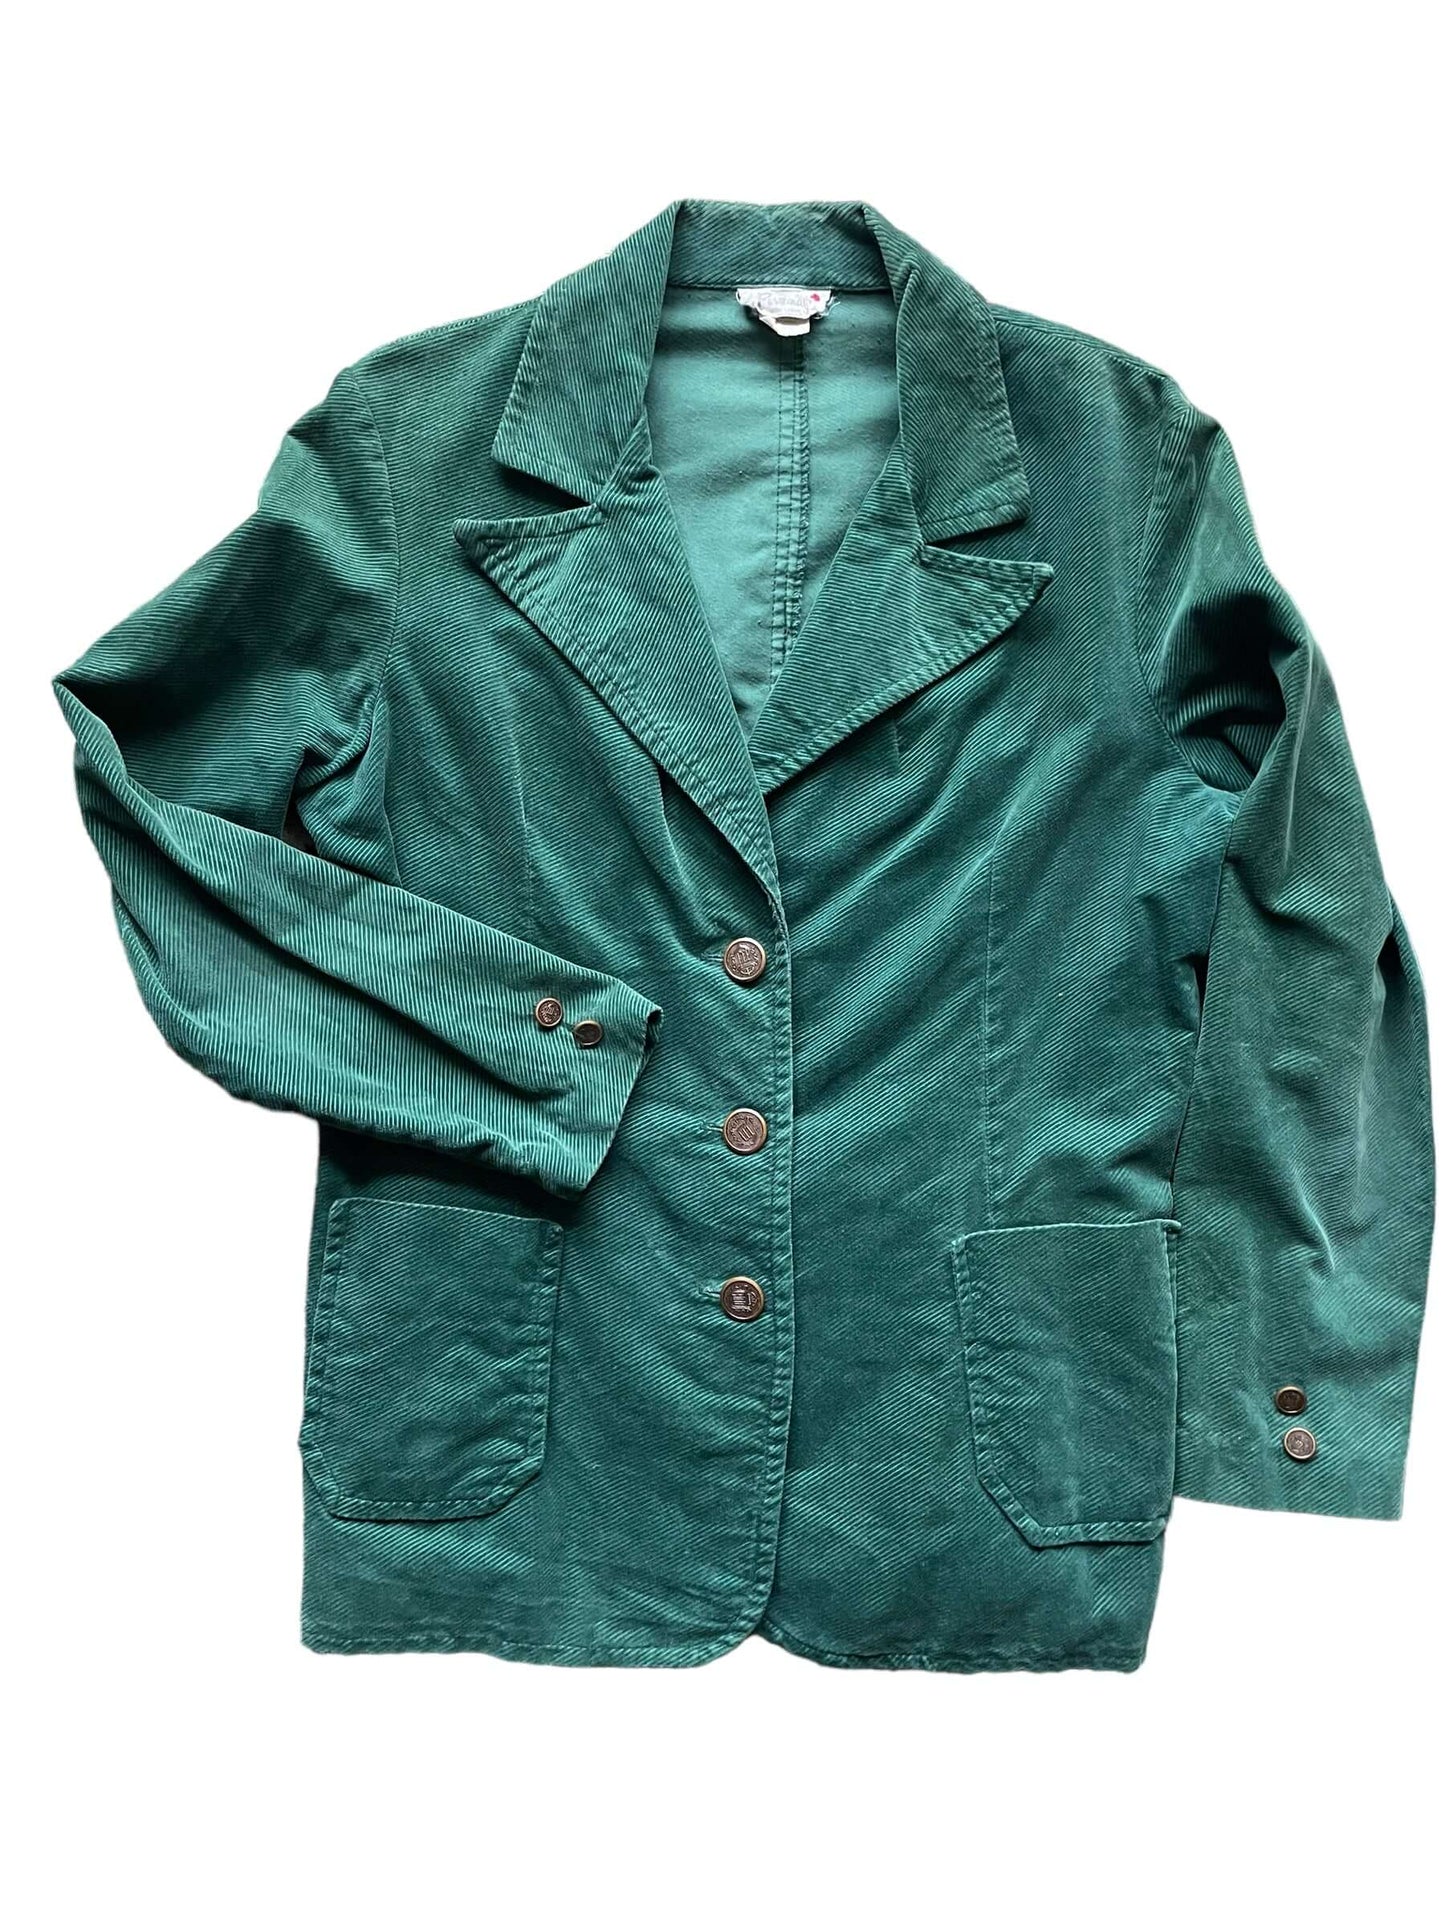 Full front view of Vintage 1970s Green Corduroy Blazer | Vintage Ladies Clothing | Barn Owl True Vintage